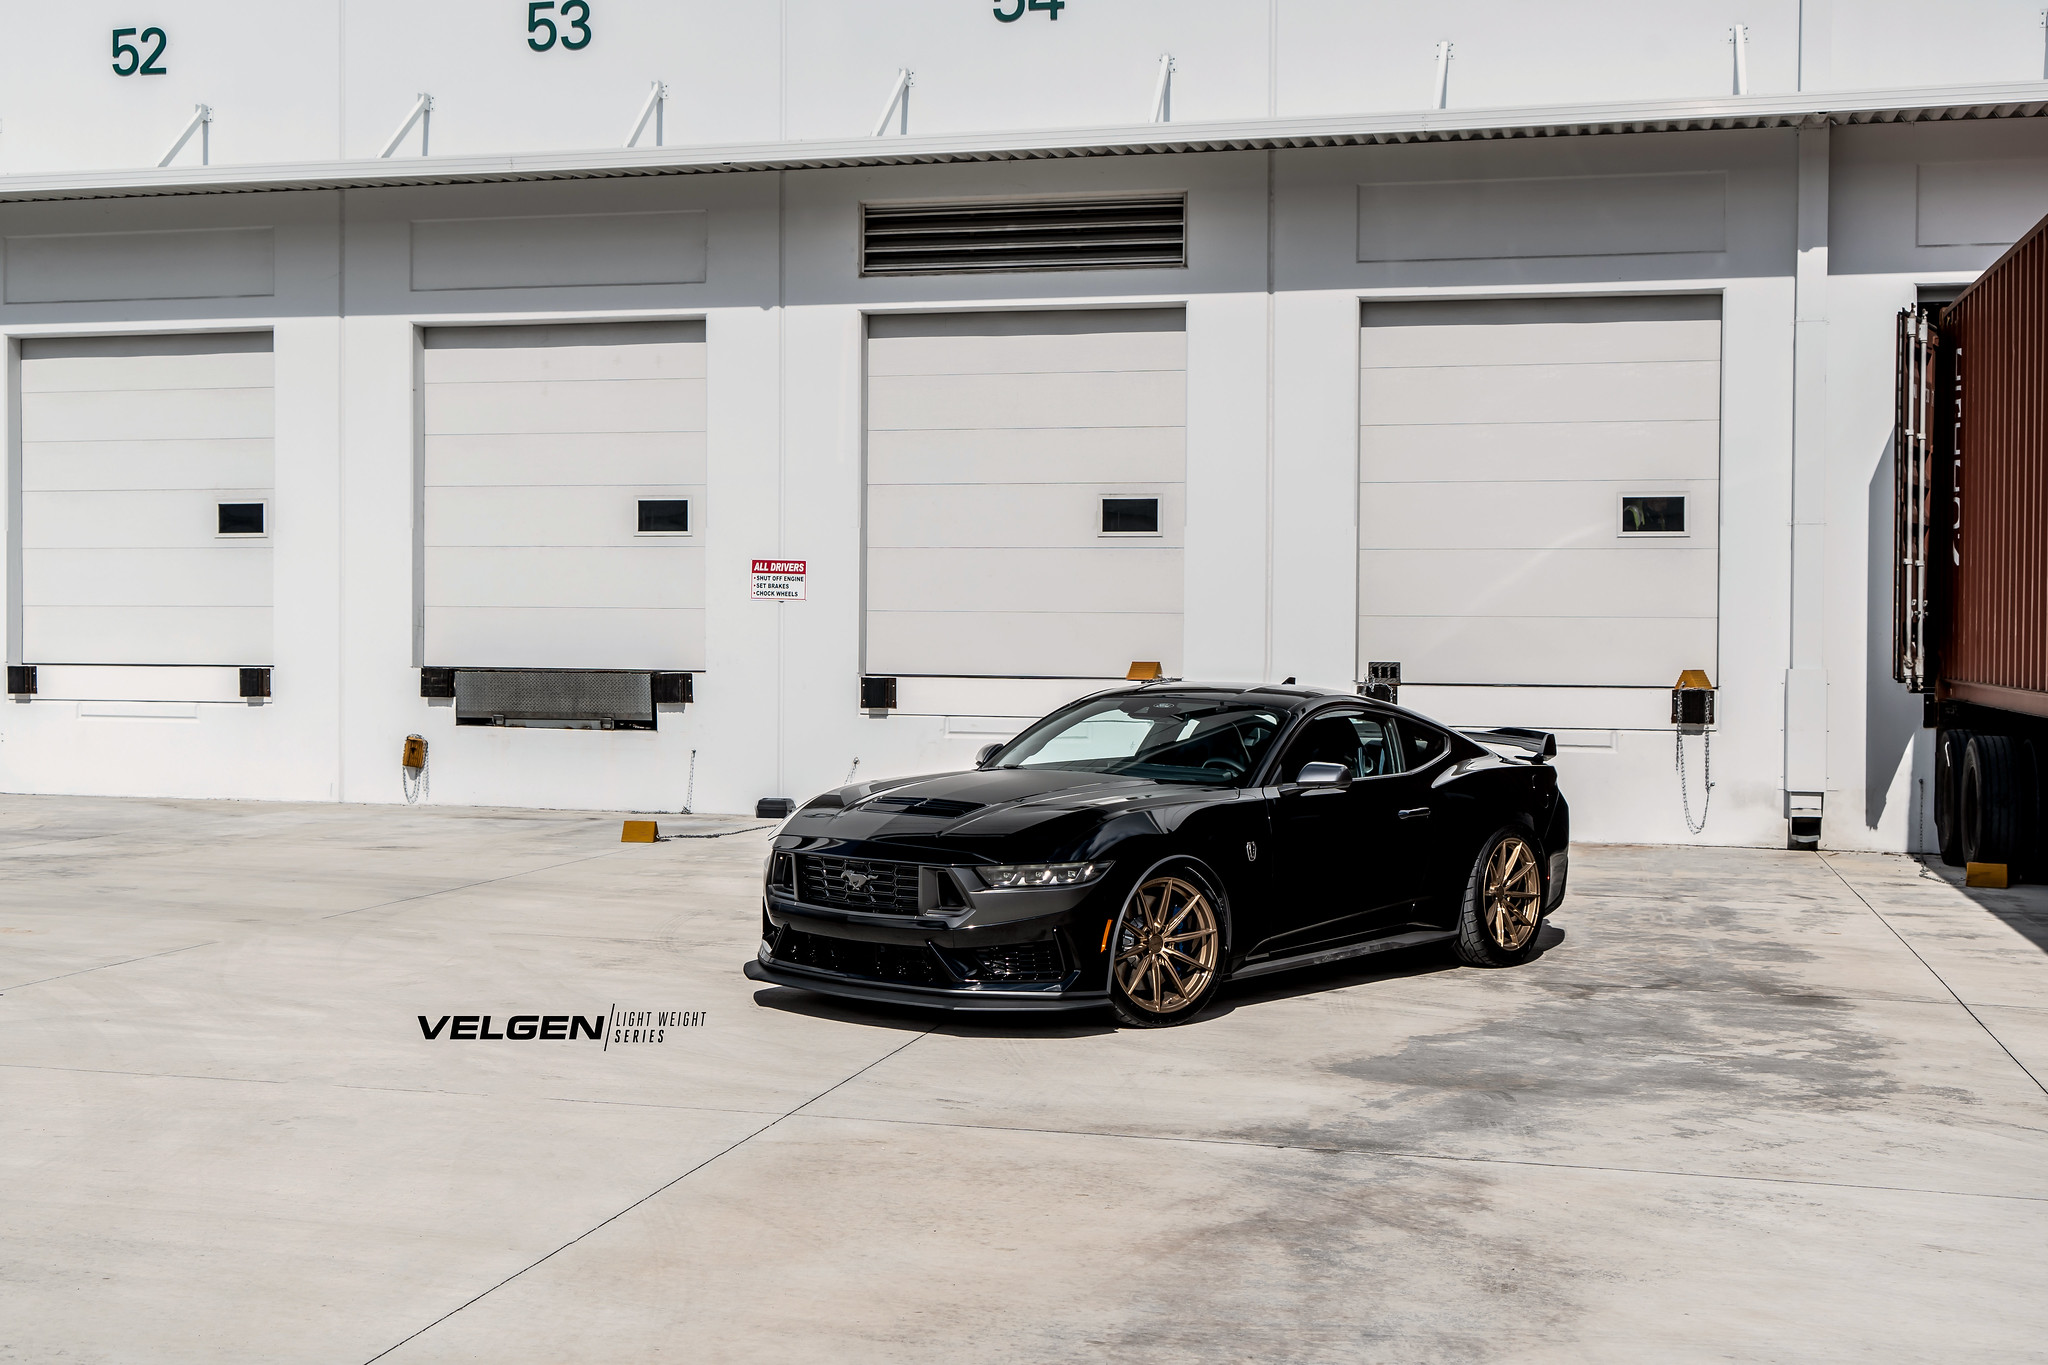 S650 Mustang Mustang DarkHorse with Gloss Bronze Velgen VF10's | VIBE Motorsports 53455459236_0e2e4283a0_k